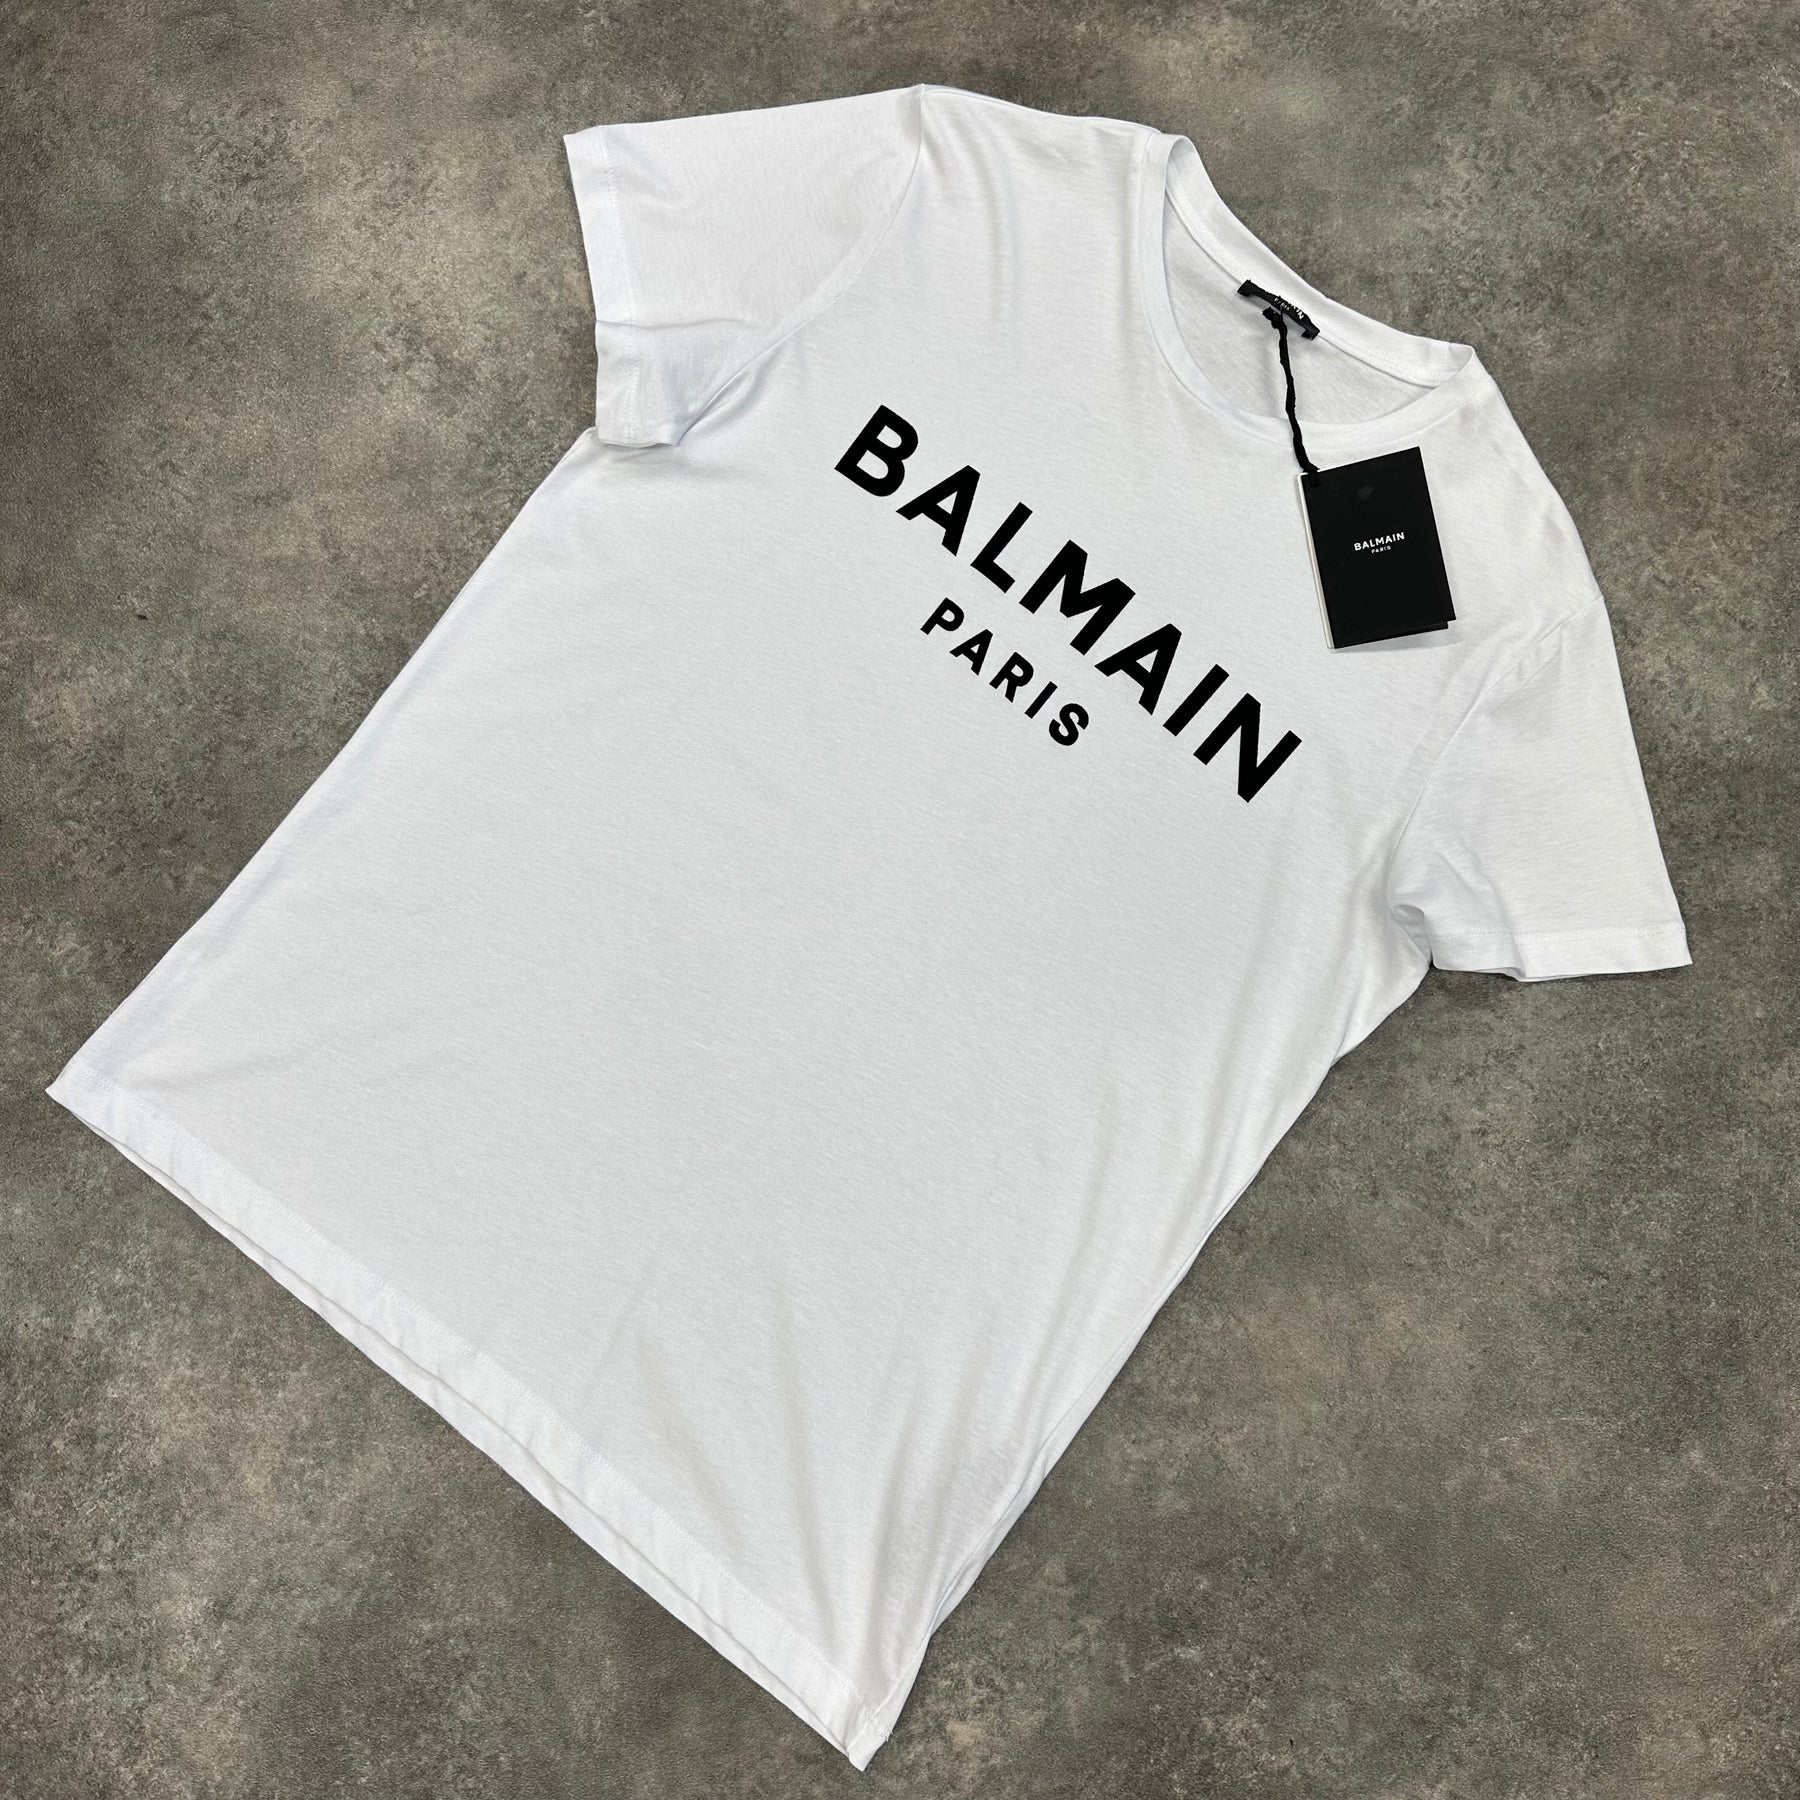 BALMAIN PARIS FELT TEXT T-SHIRT WHITE